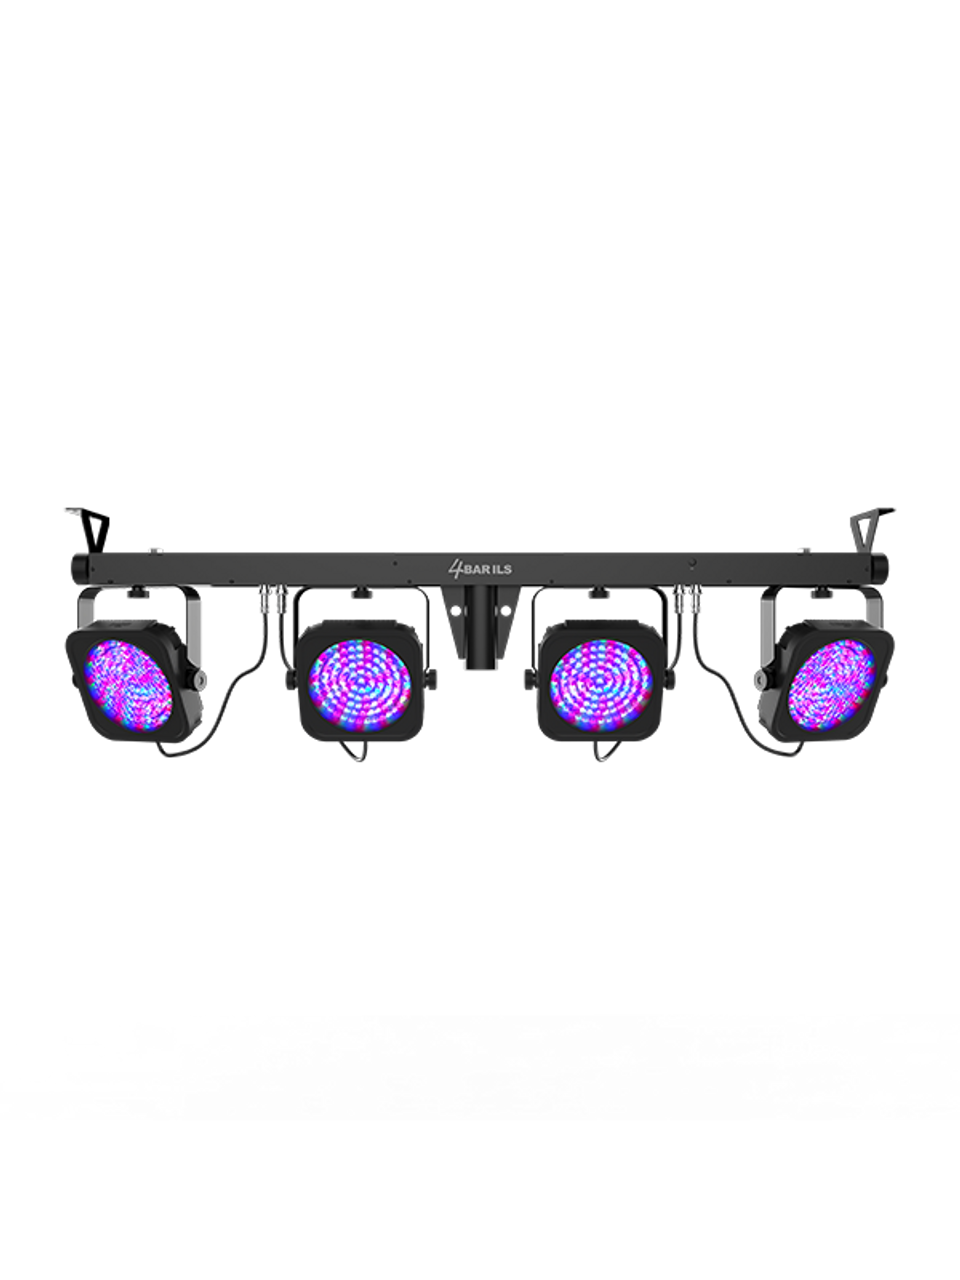 Chauvet DJ 4BARILS 4BAR ILS All-in-One RGB 4-Par Wash Light System (4BARILS)